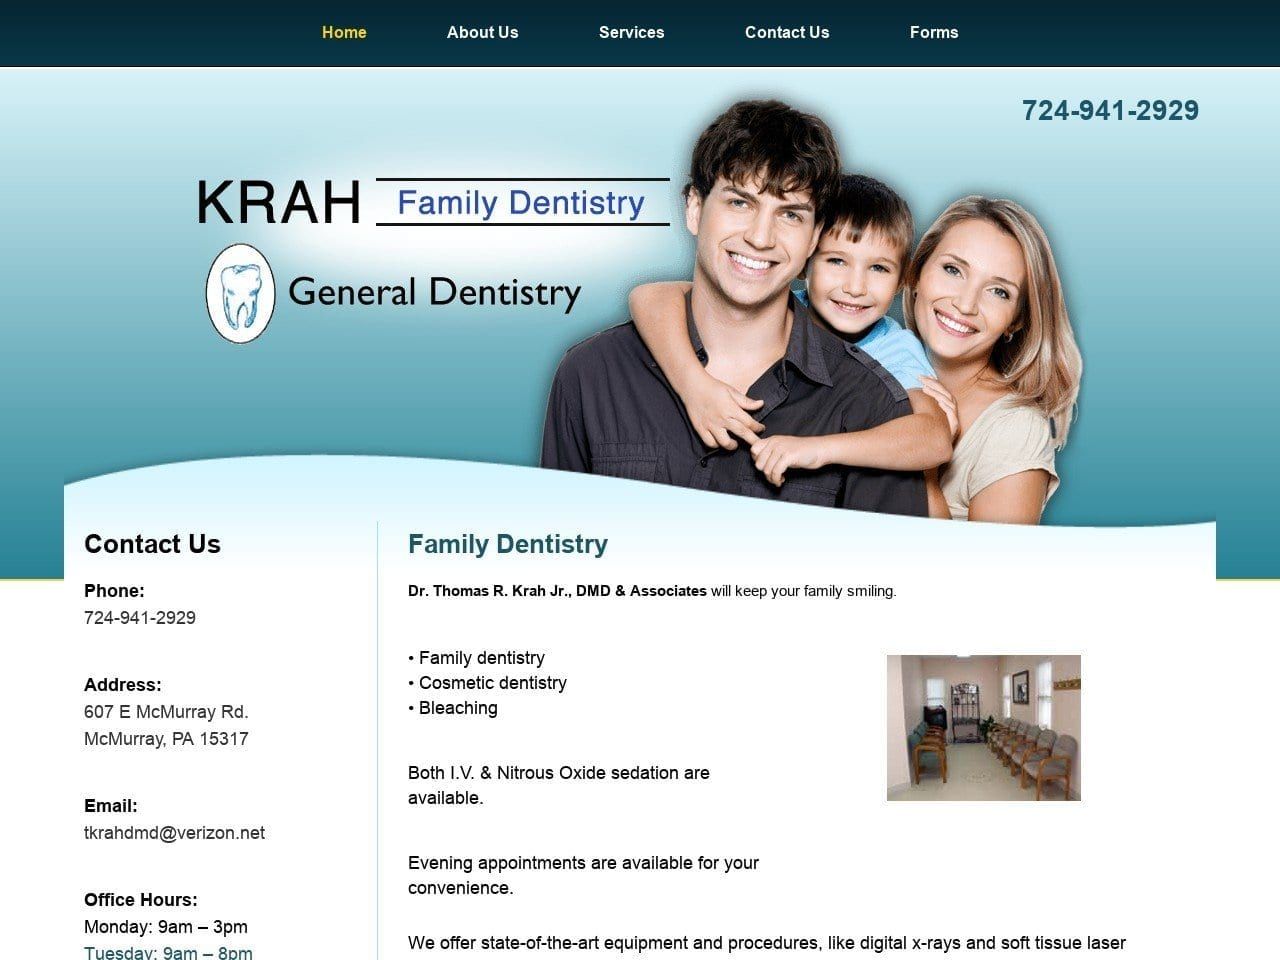 Thomas R Krah & Associates Website Screenshot from krahfamilydentistry.com